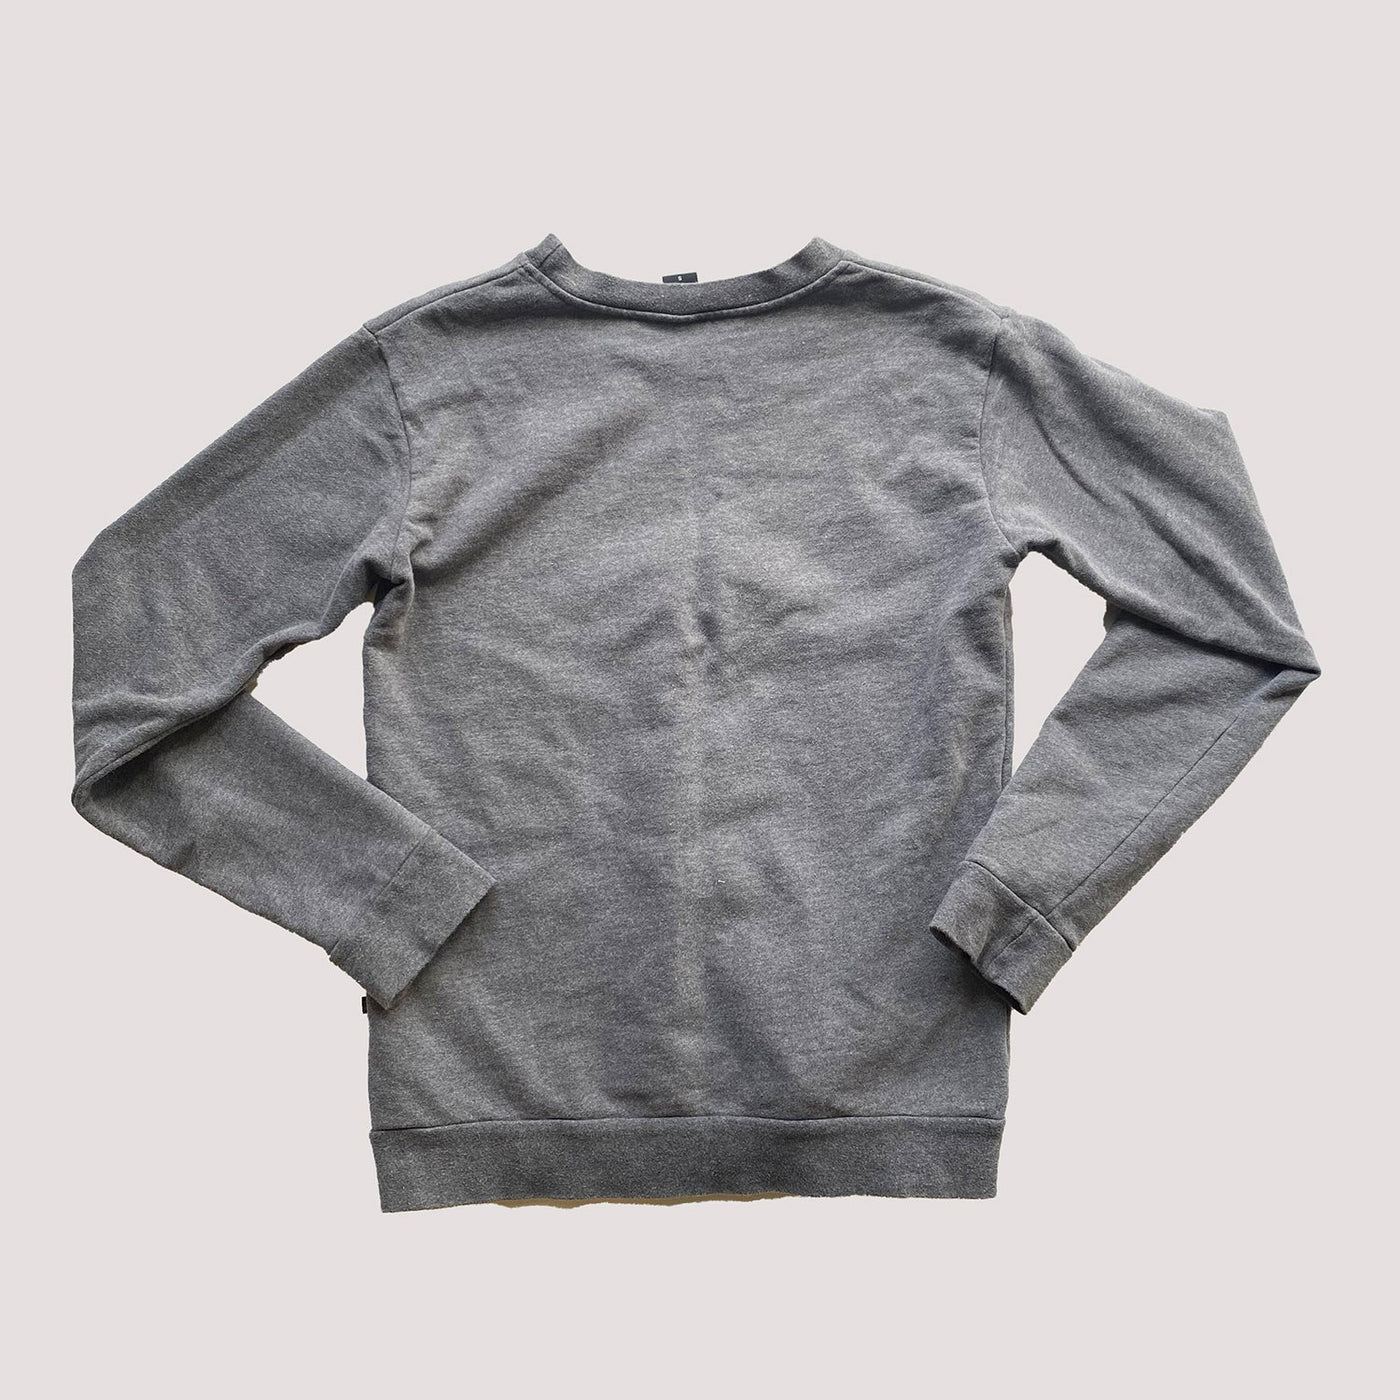 Kaiko logo sweatshirt, grey | unisex S